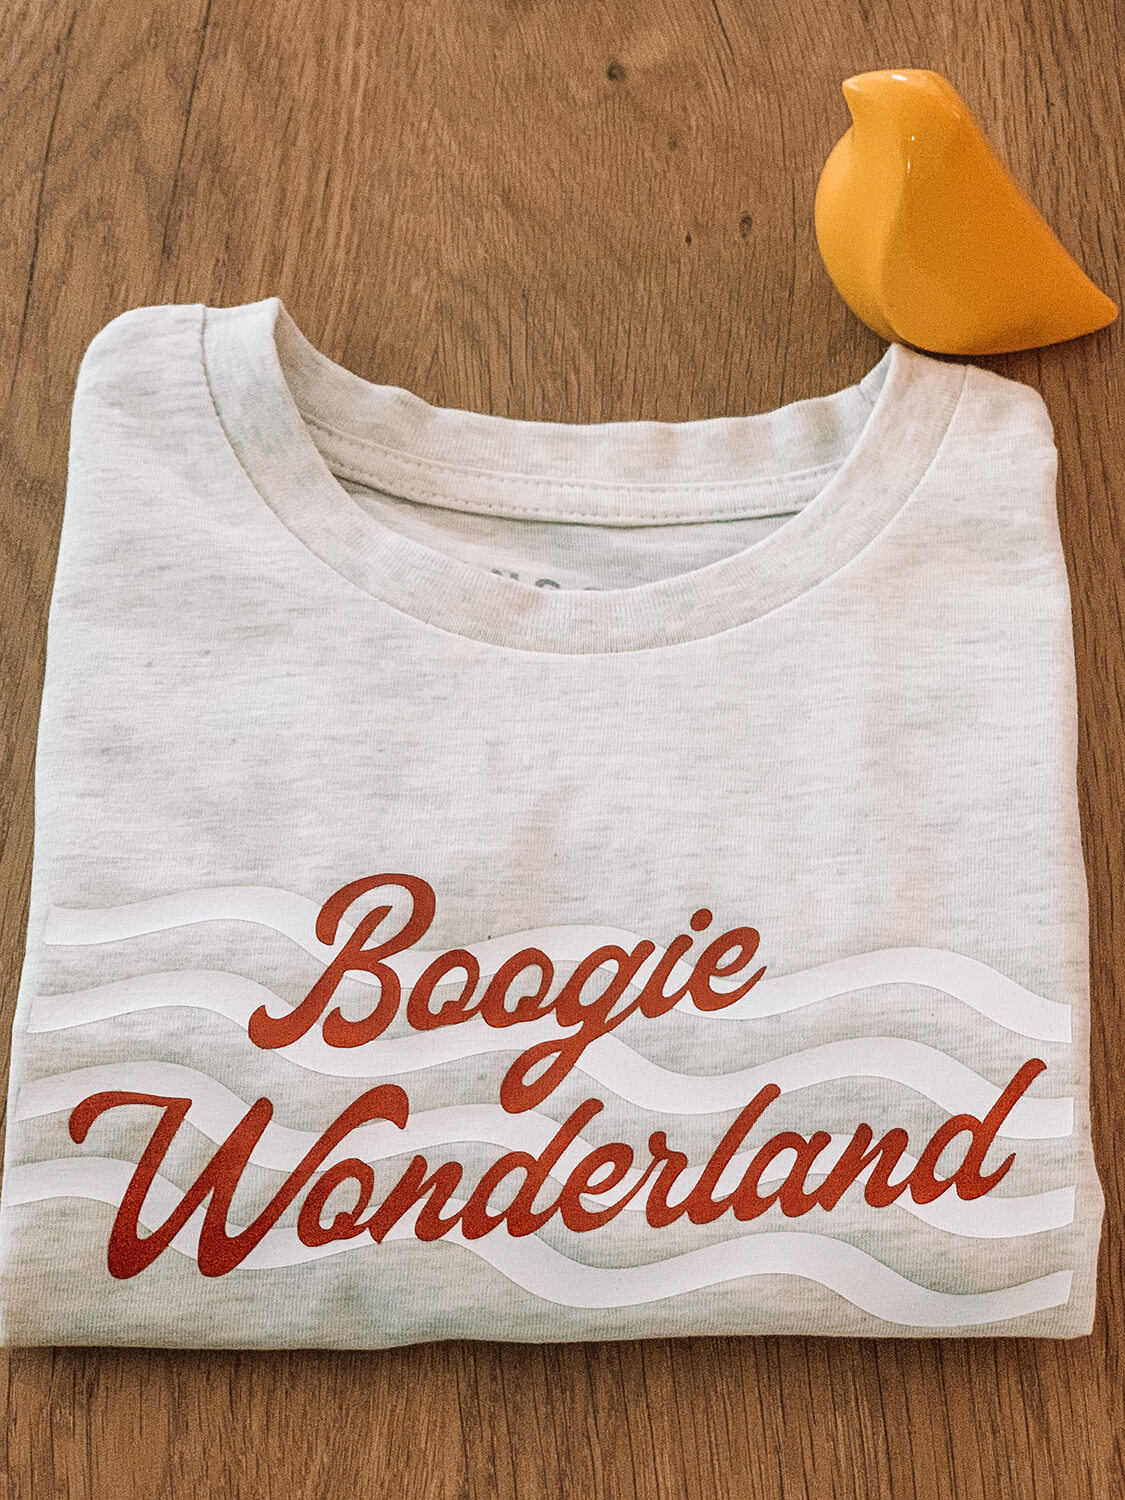 Boogie Wonderland t-shirt by Mangos on Monday